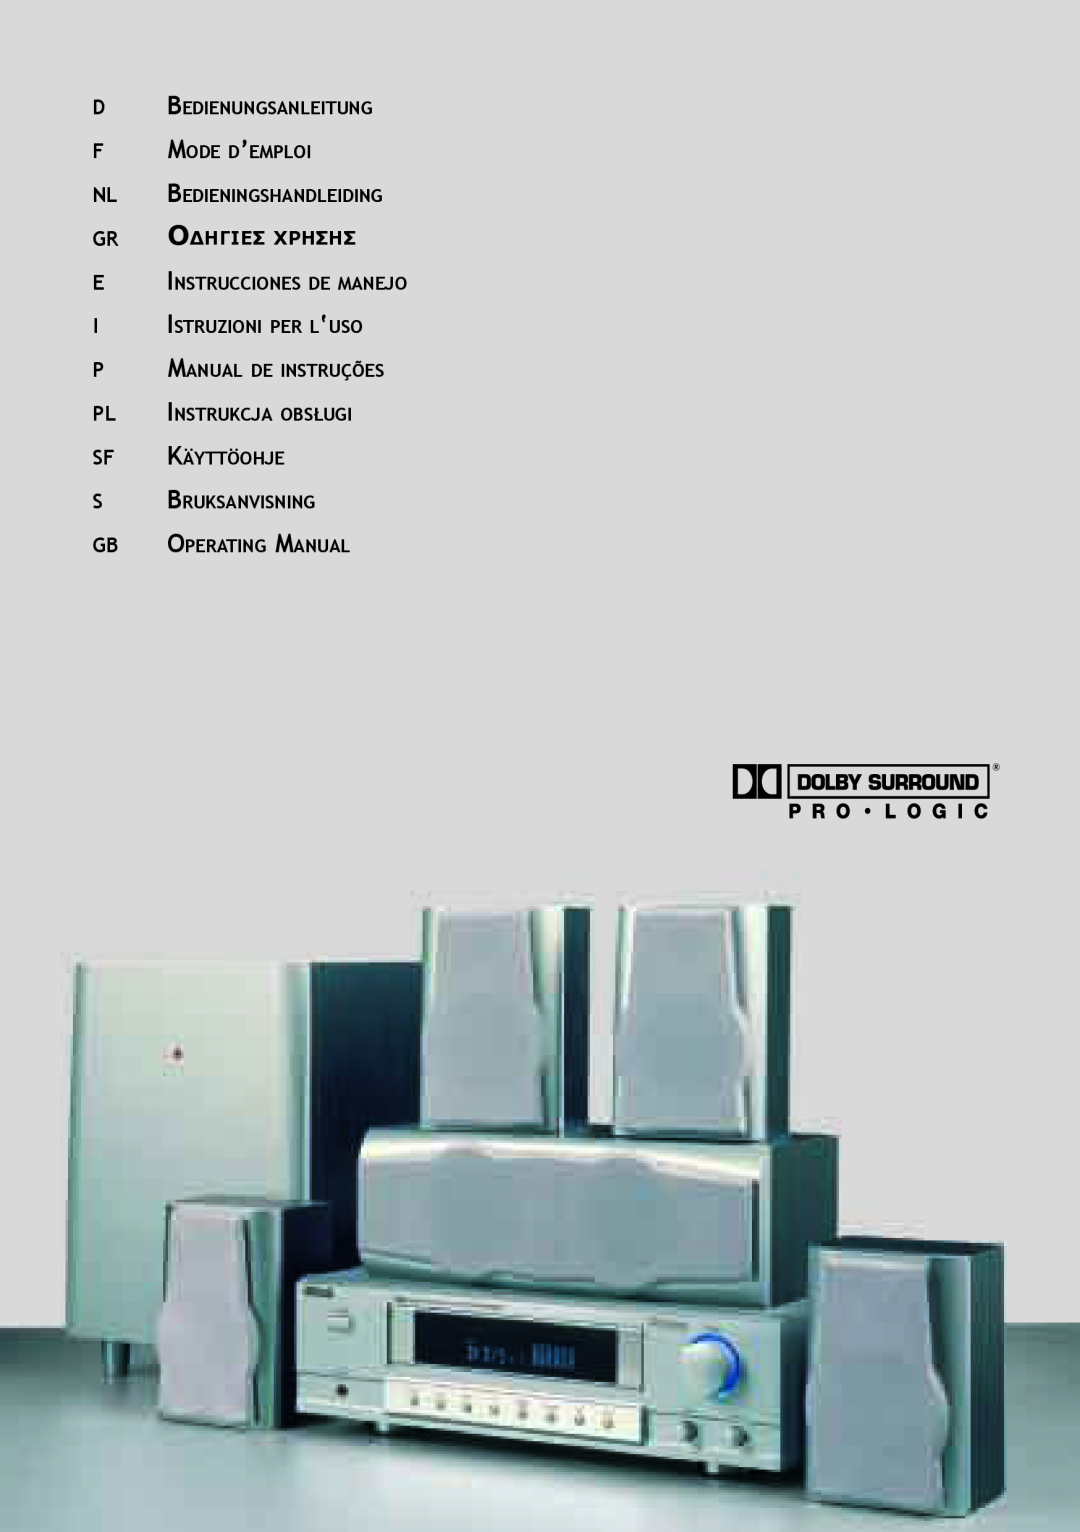 Dolby Laboratories KH 02 manual Dbedienungsanleitung Fmode D’Emploi, Nl Bedieningshandleiding, Gr Οδηγiεσ Χρhσησ 